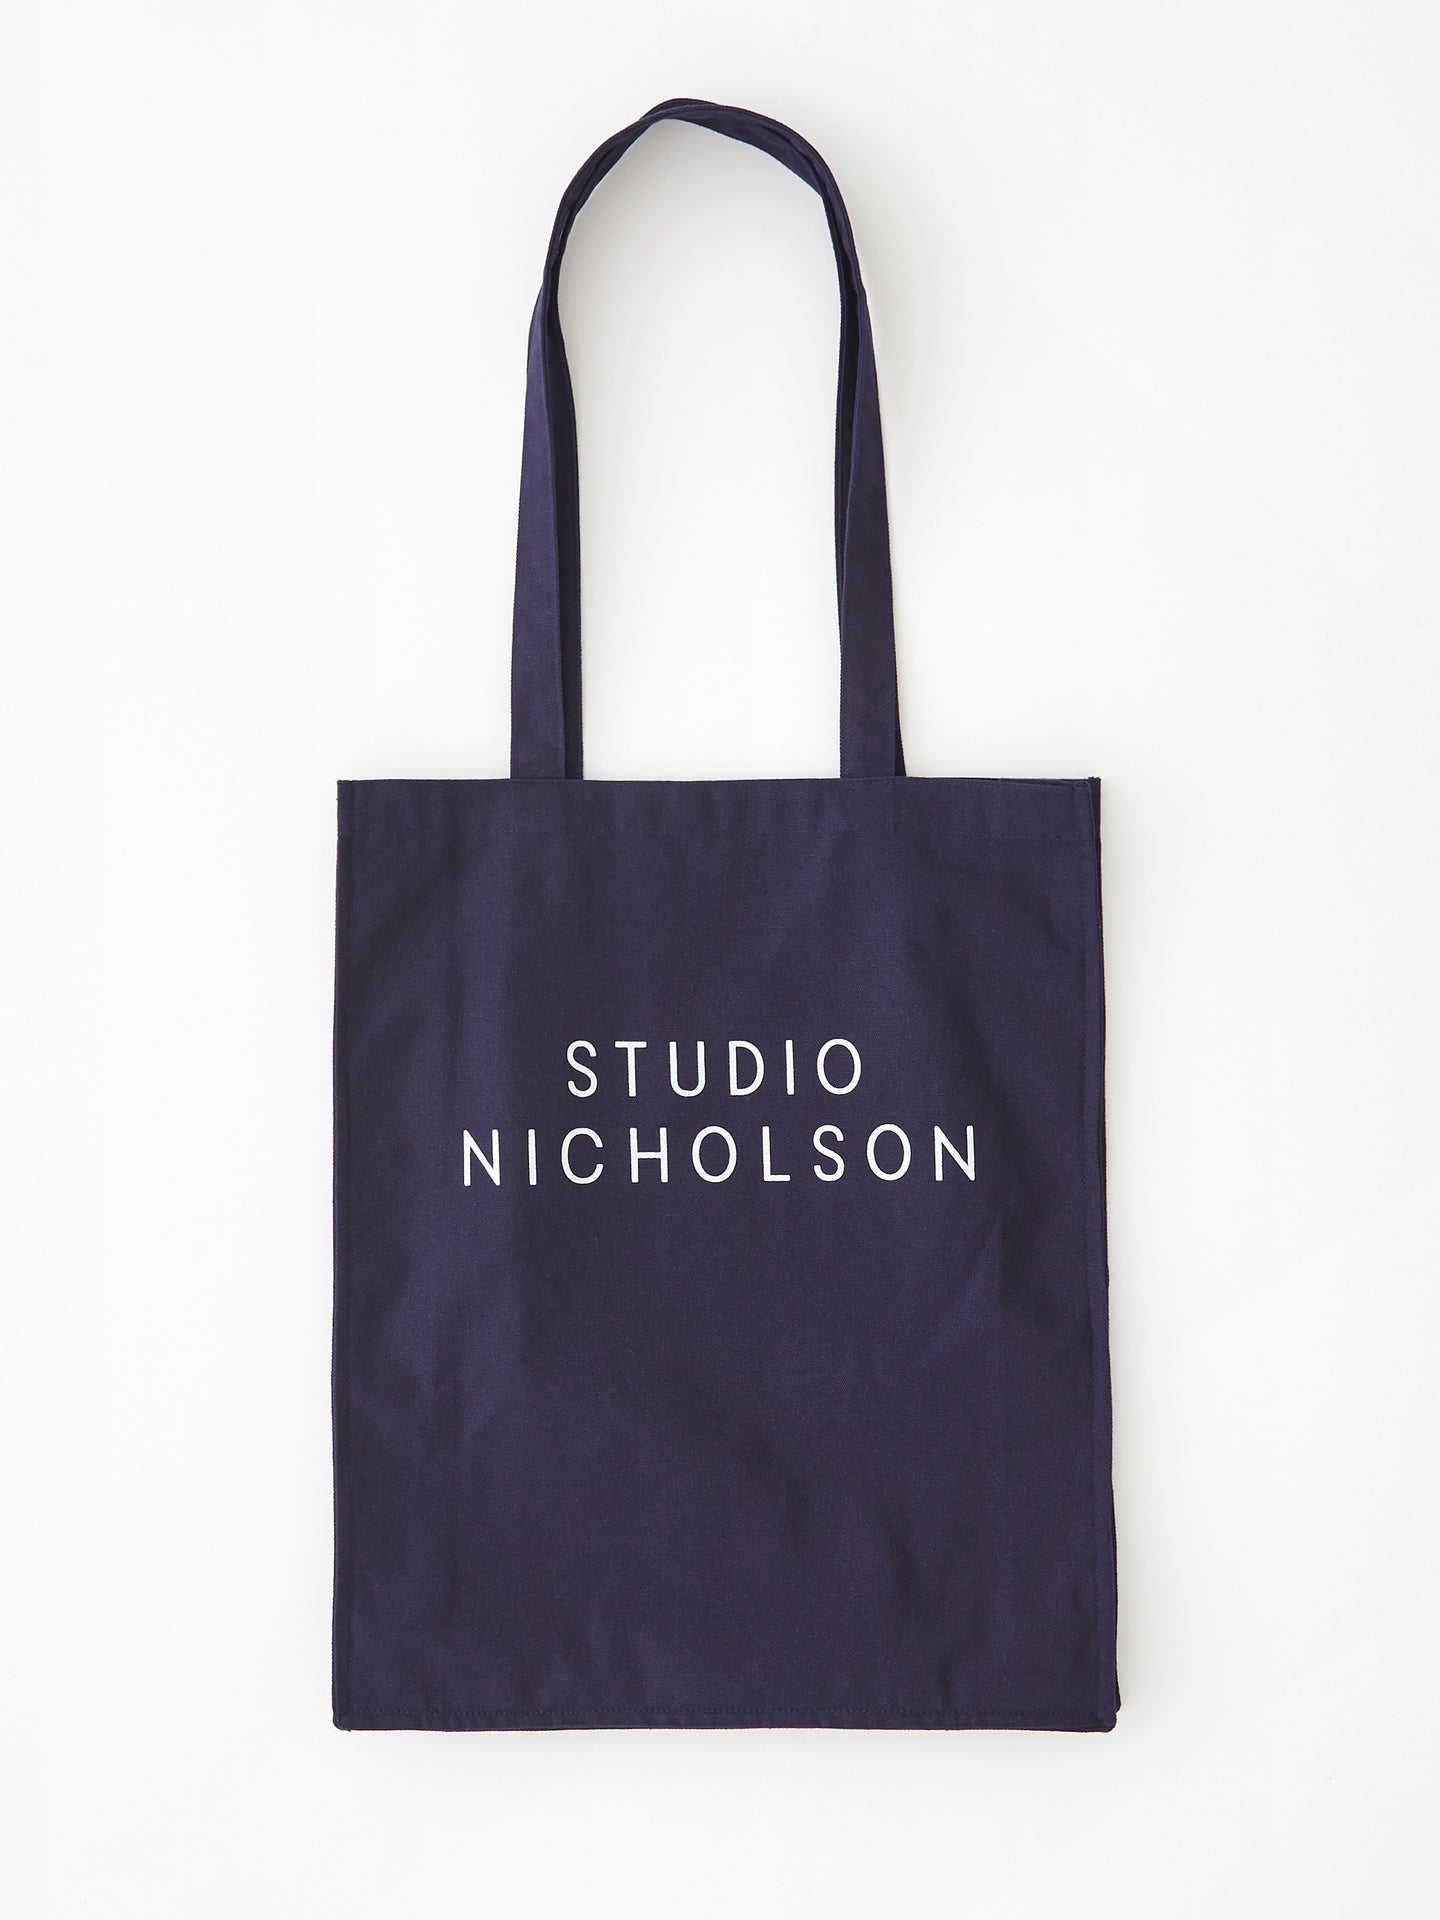 Studio Nicholson Small Tote Bag in Dark Navy